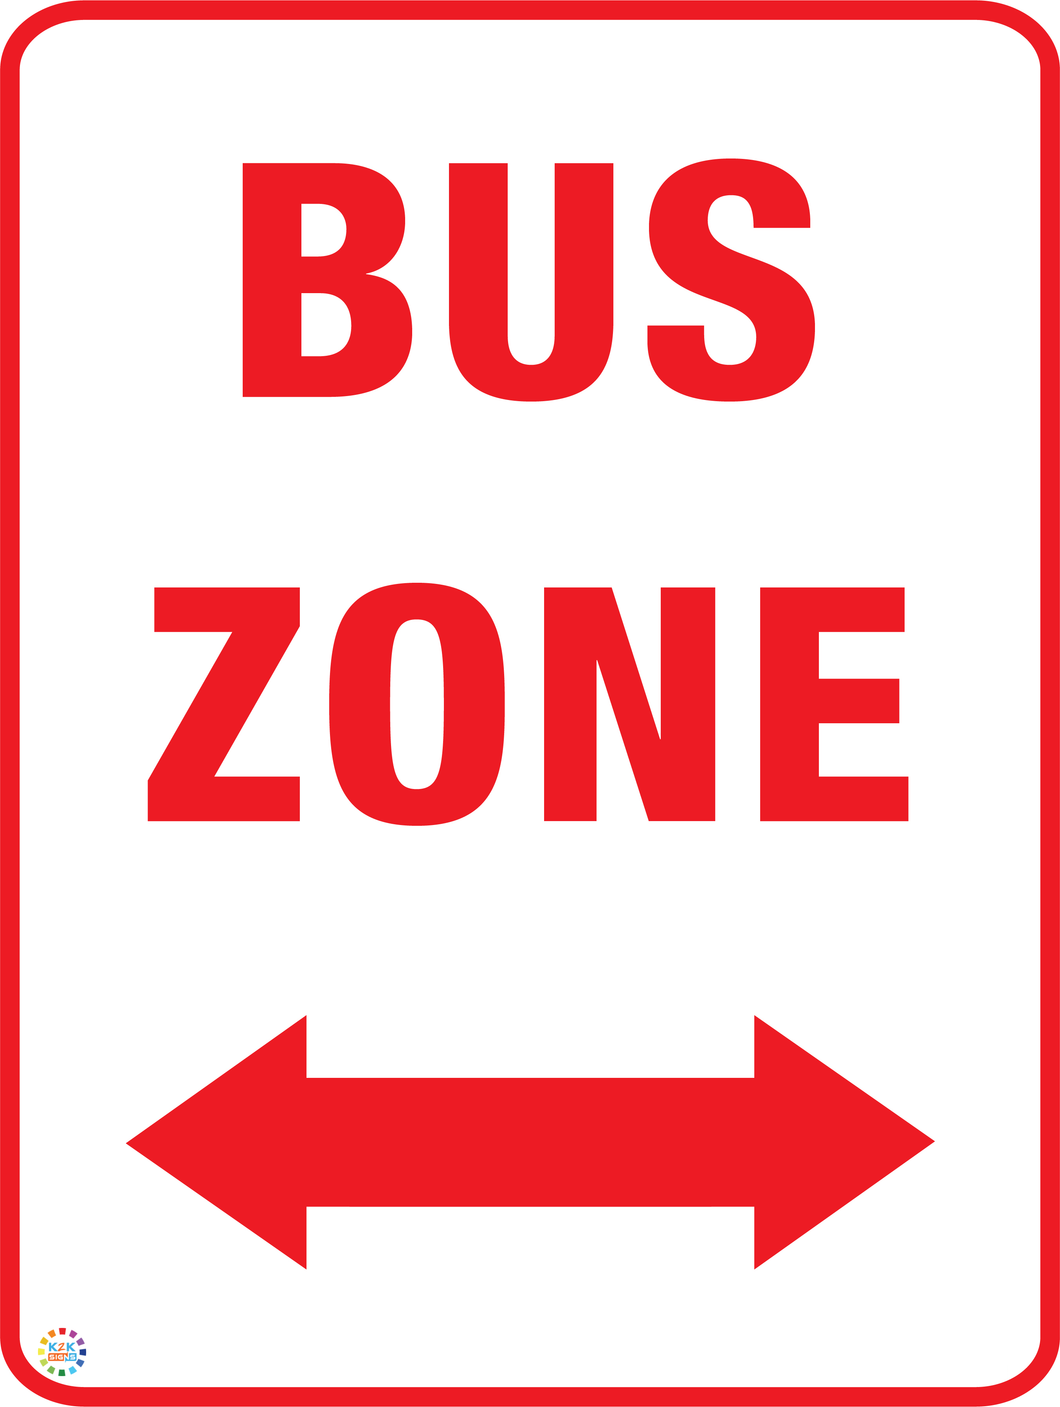 Bus Zone (Tow Way Arrow) Sign